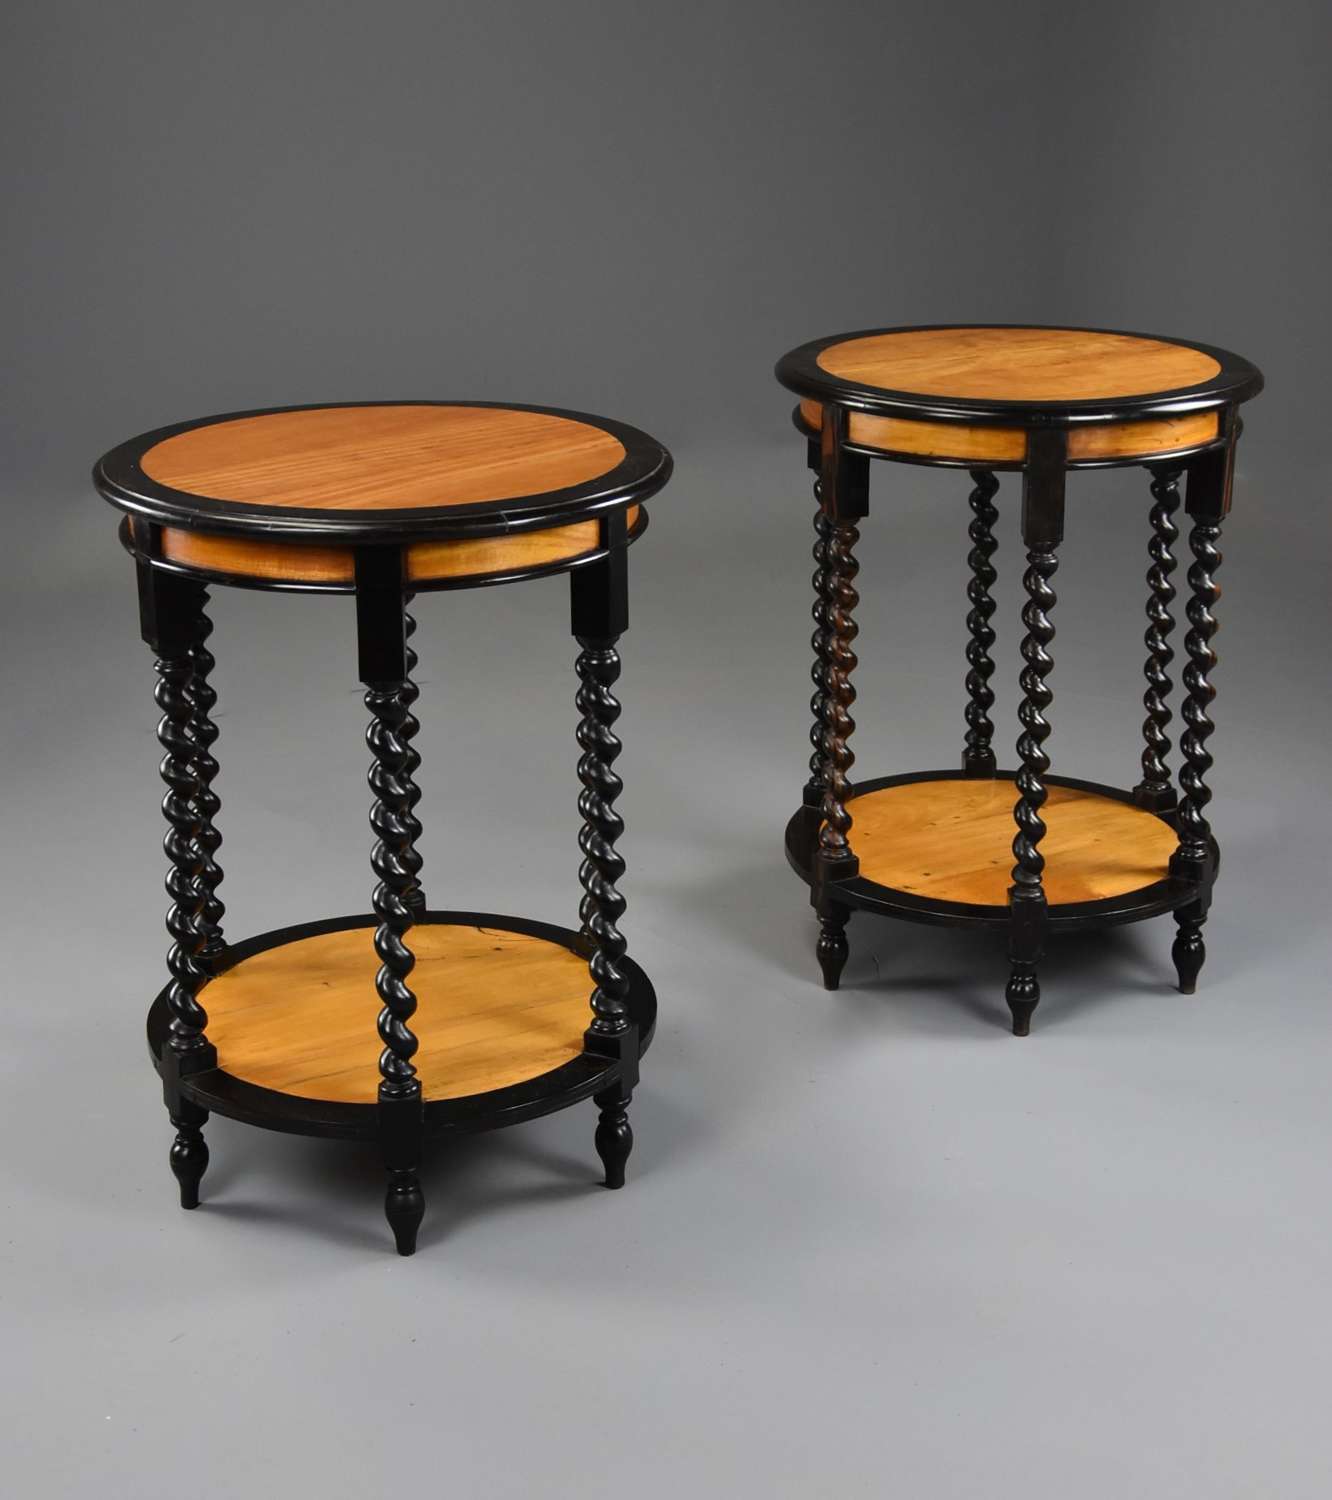 Highly decorative pair of 19thc Ceylonese satinwood & ebony tables